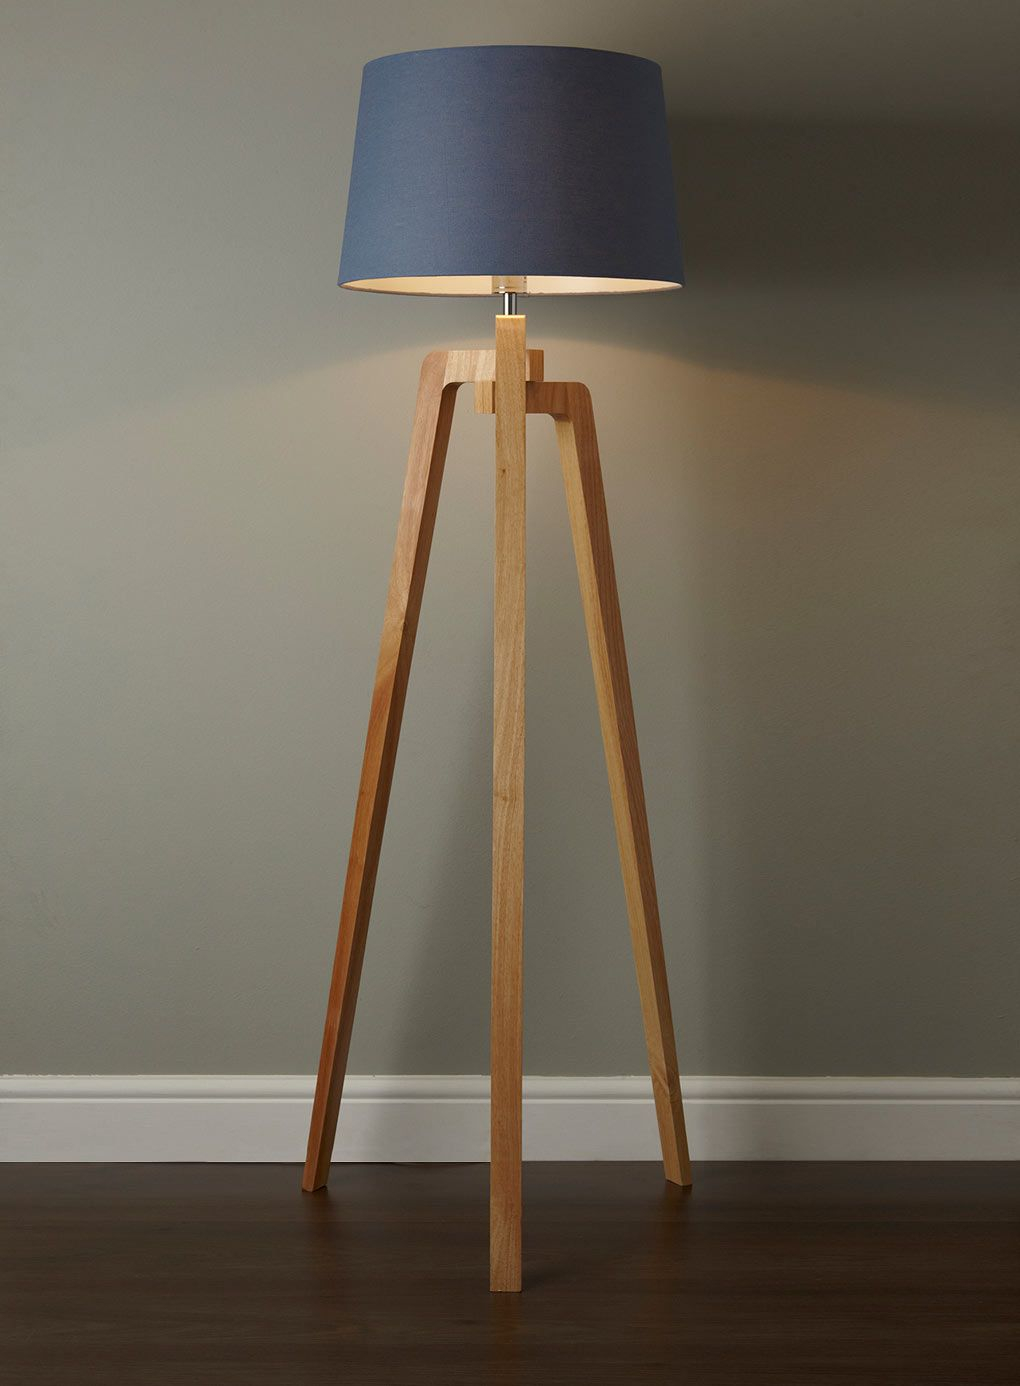 Co Wooden Tripod Floor Lamp Bhs Lampe Regal regarding measurements 1020 X 1386